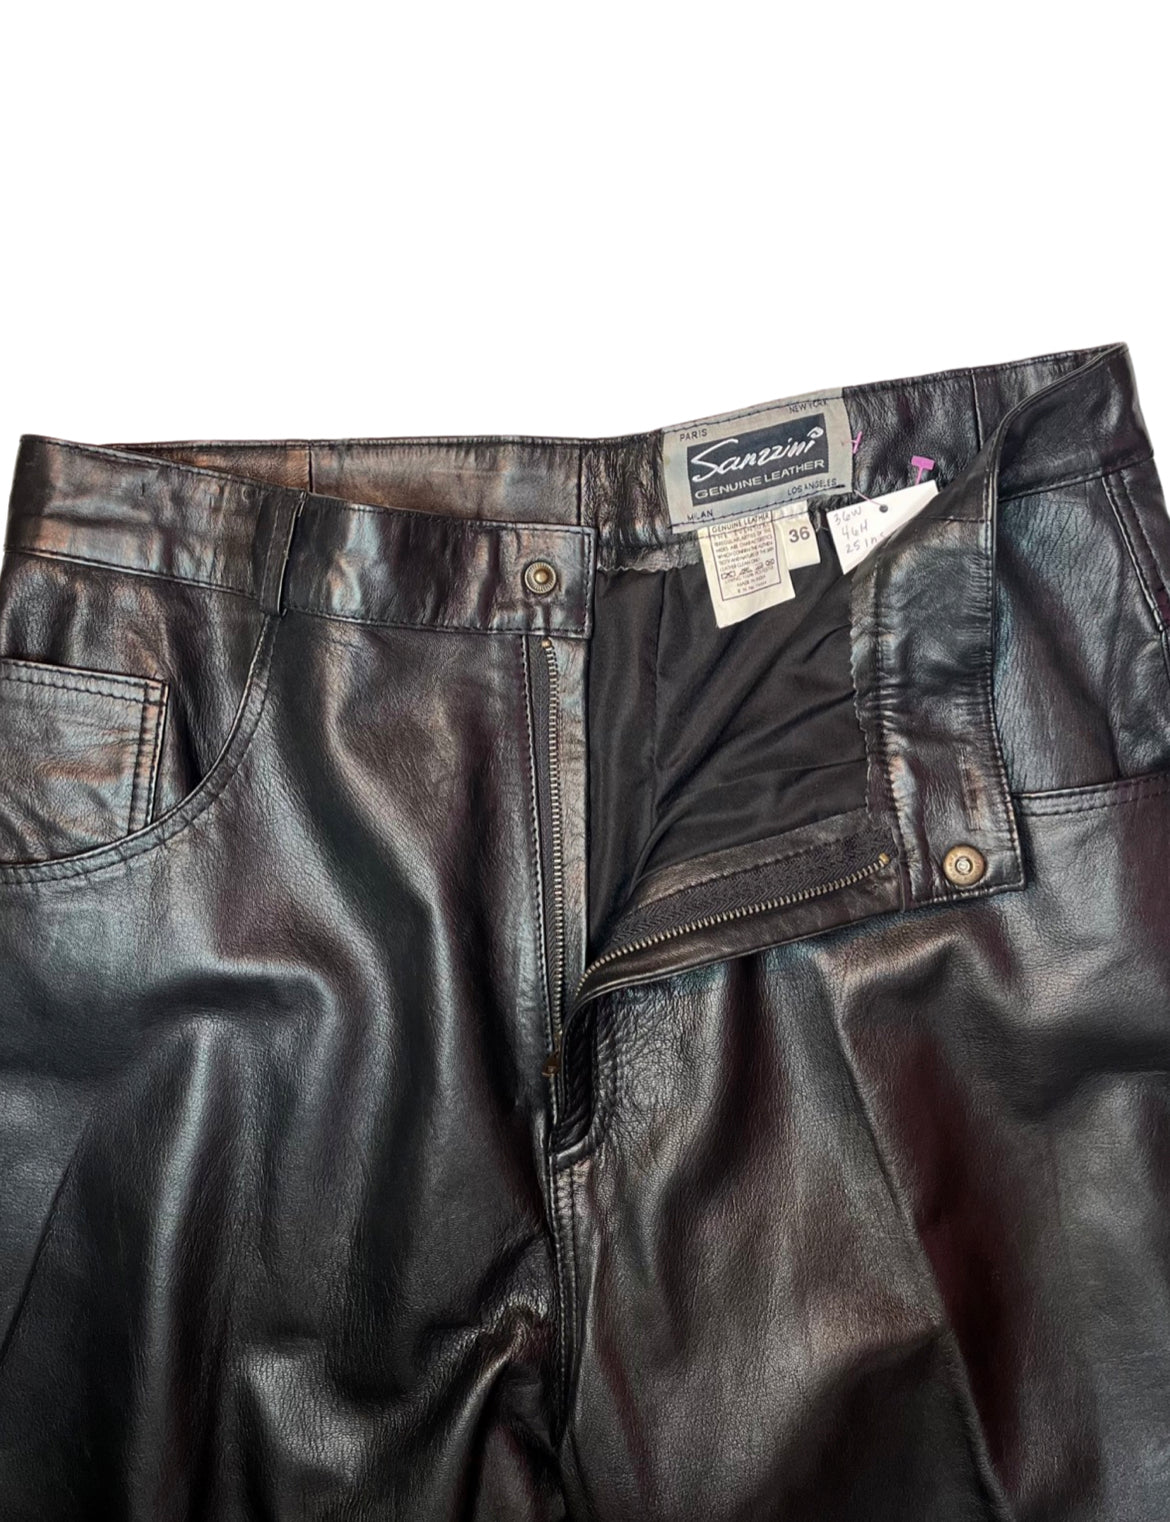 Sanzzini True Black Leather Trouser